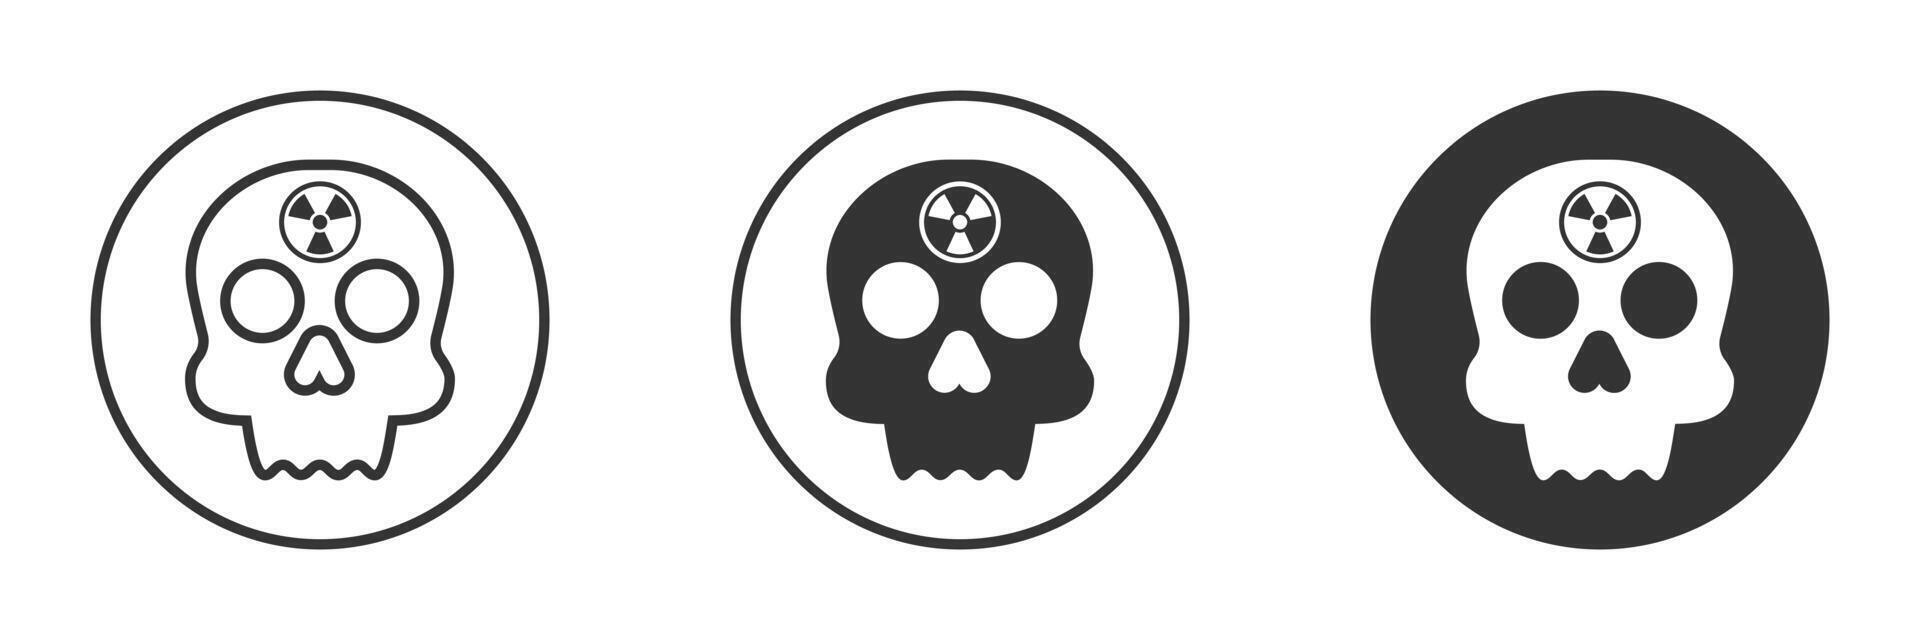 crâne icône avec radiation symbole. vecteur illustration.